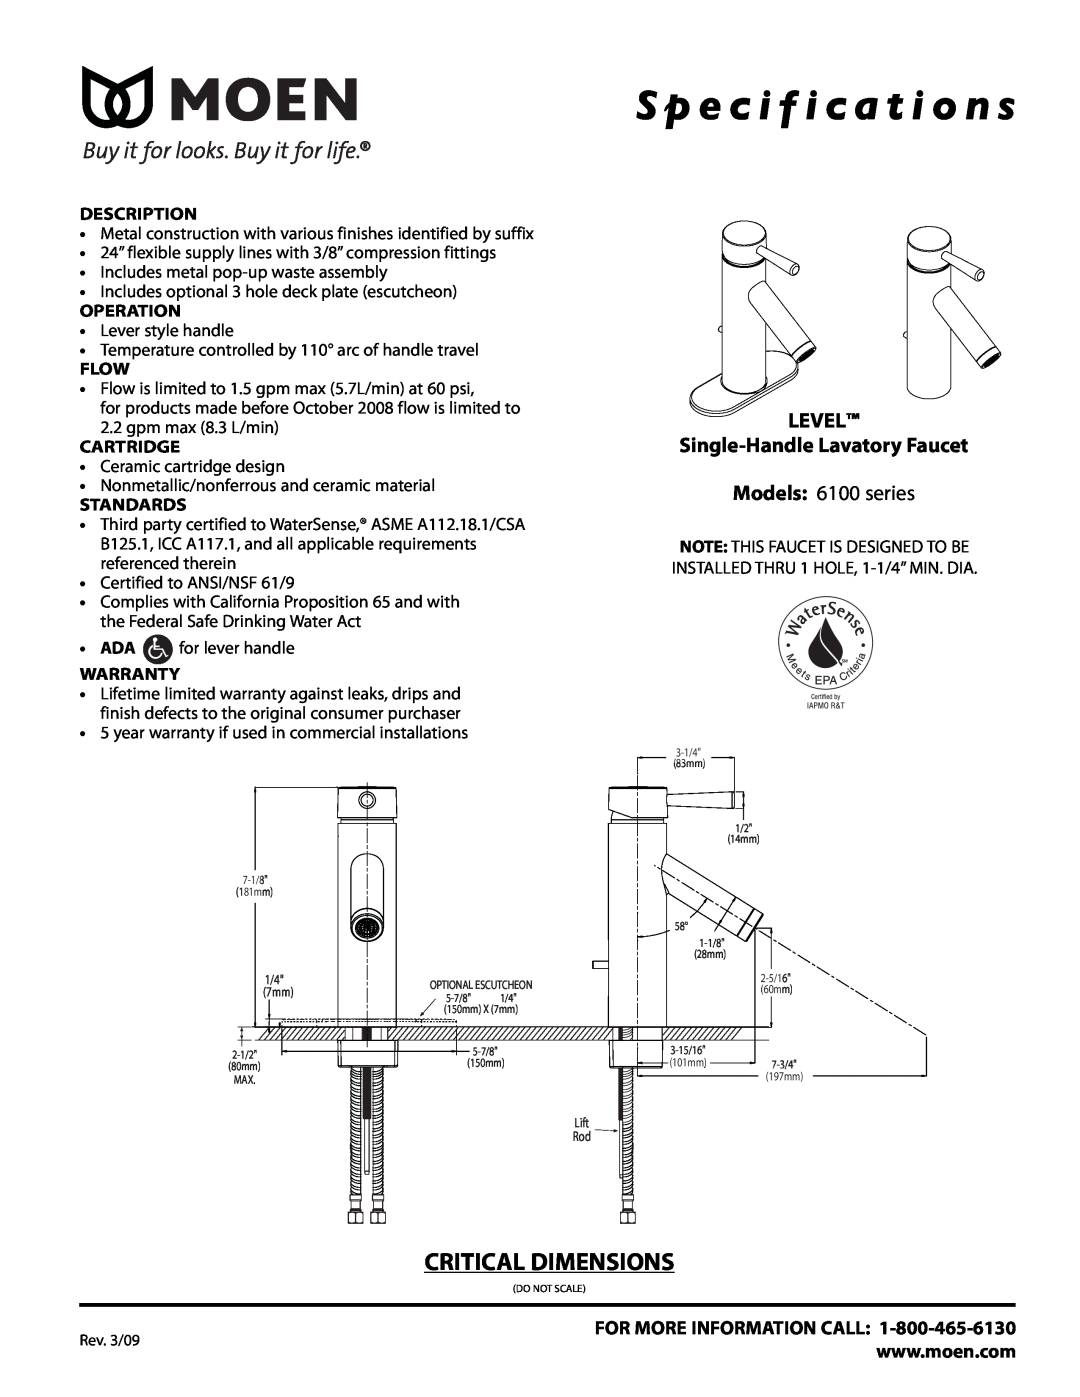 Moen 6100 Series specifications S p e c i f i c a t i o n s, Critical Dimensions, LEVEL Single-Handle Lavatory Faucet 